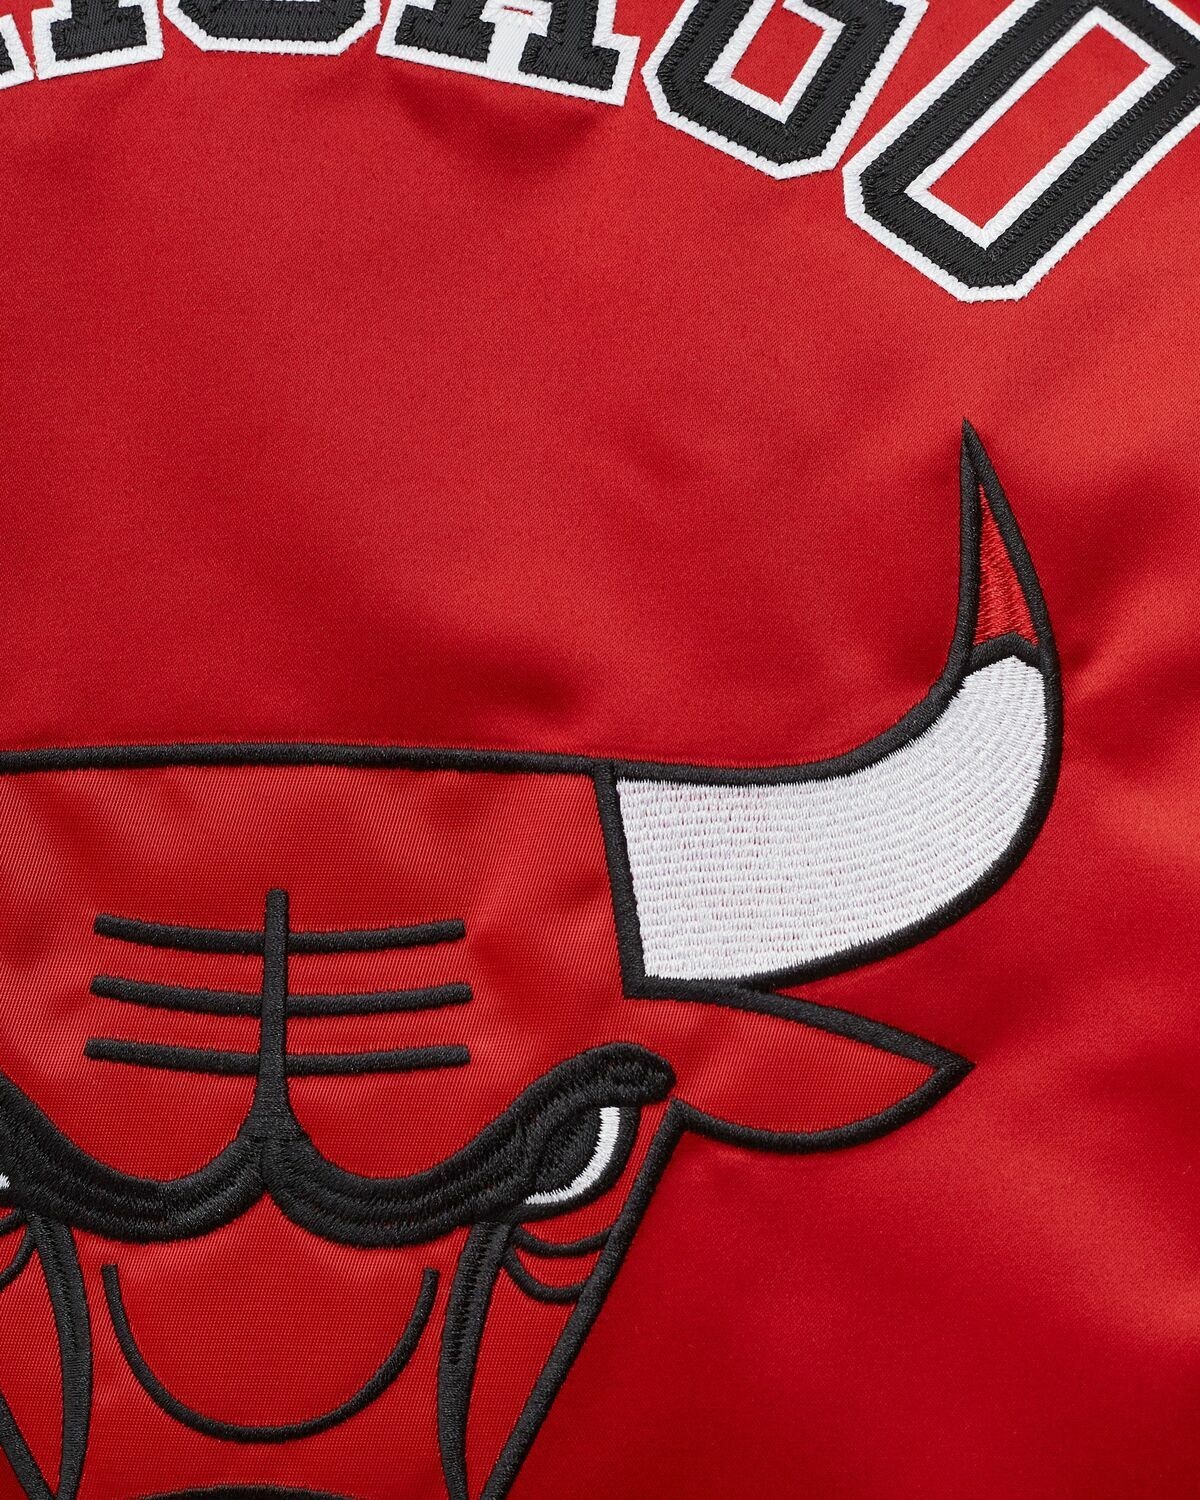 Mitchell & Ness Nba Heavyweight Satin Jacket Chicago Bulls Red - Mens - College Jackets/Team Jackets